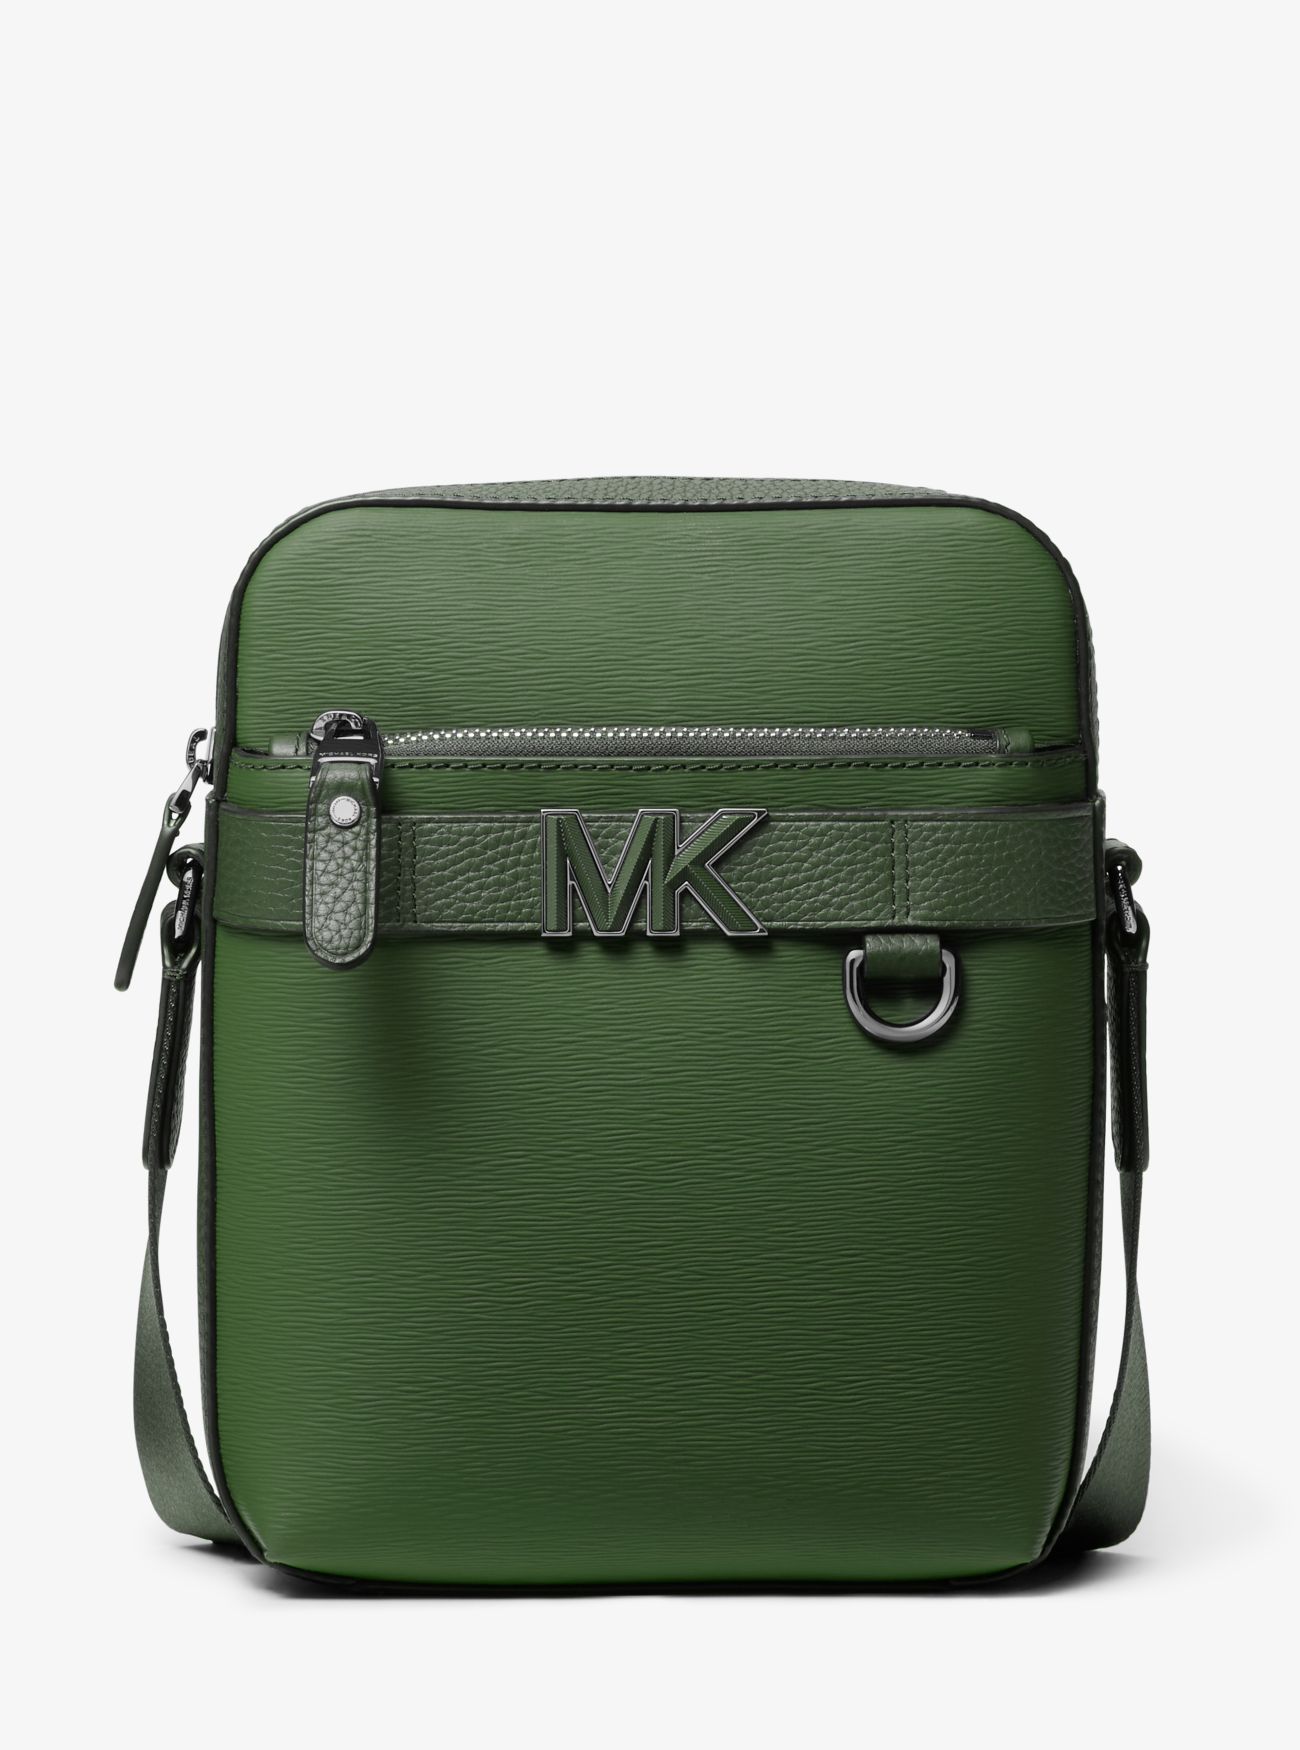 MK Hudson Leather Flight Bag - Green - Michael Kors